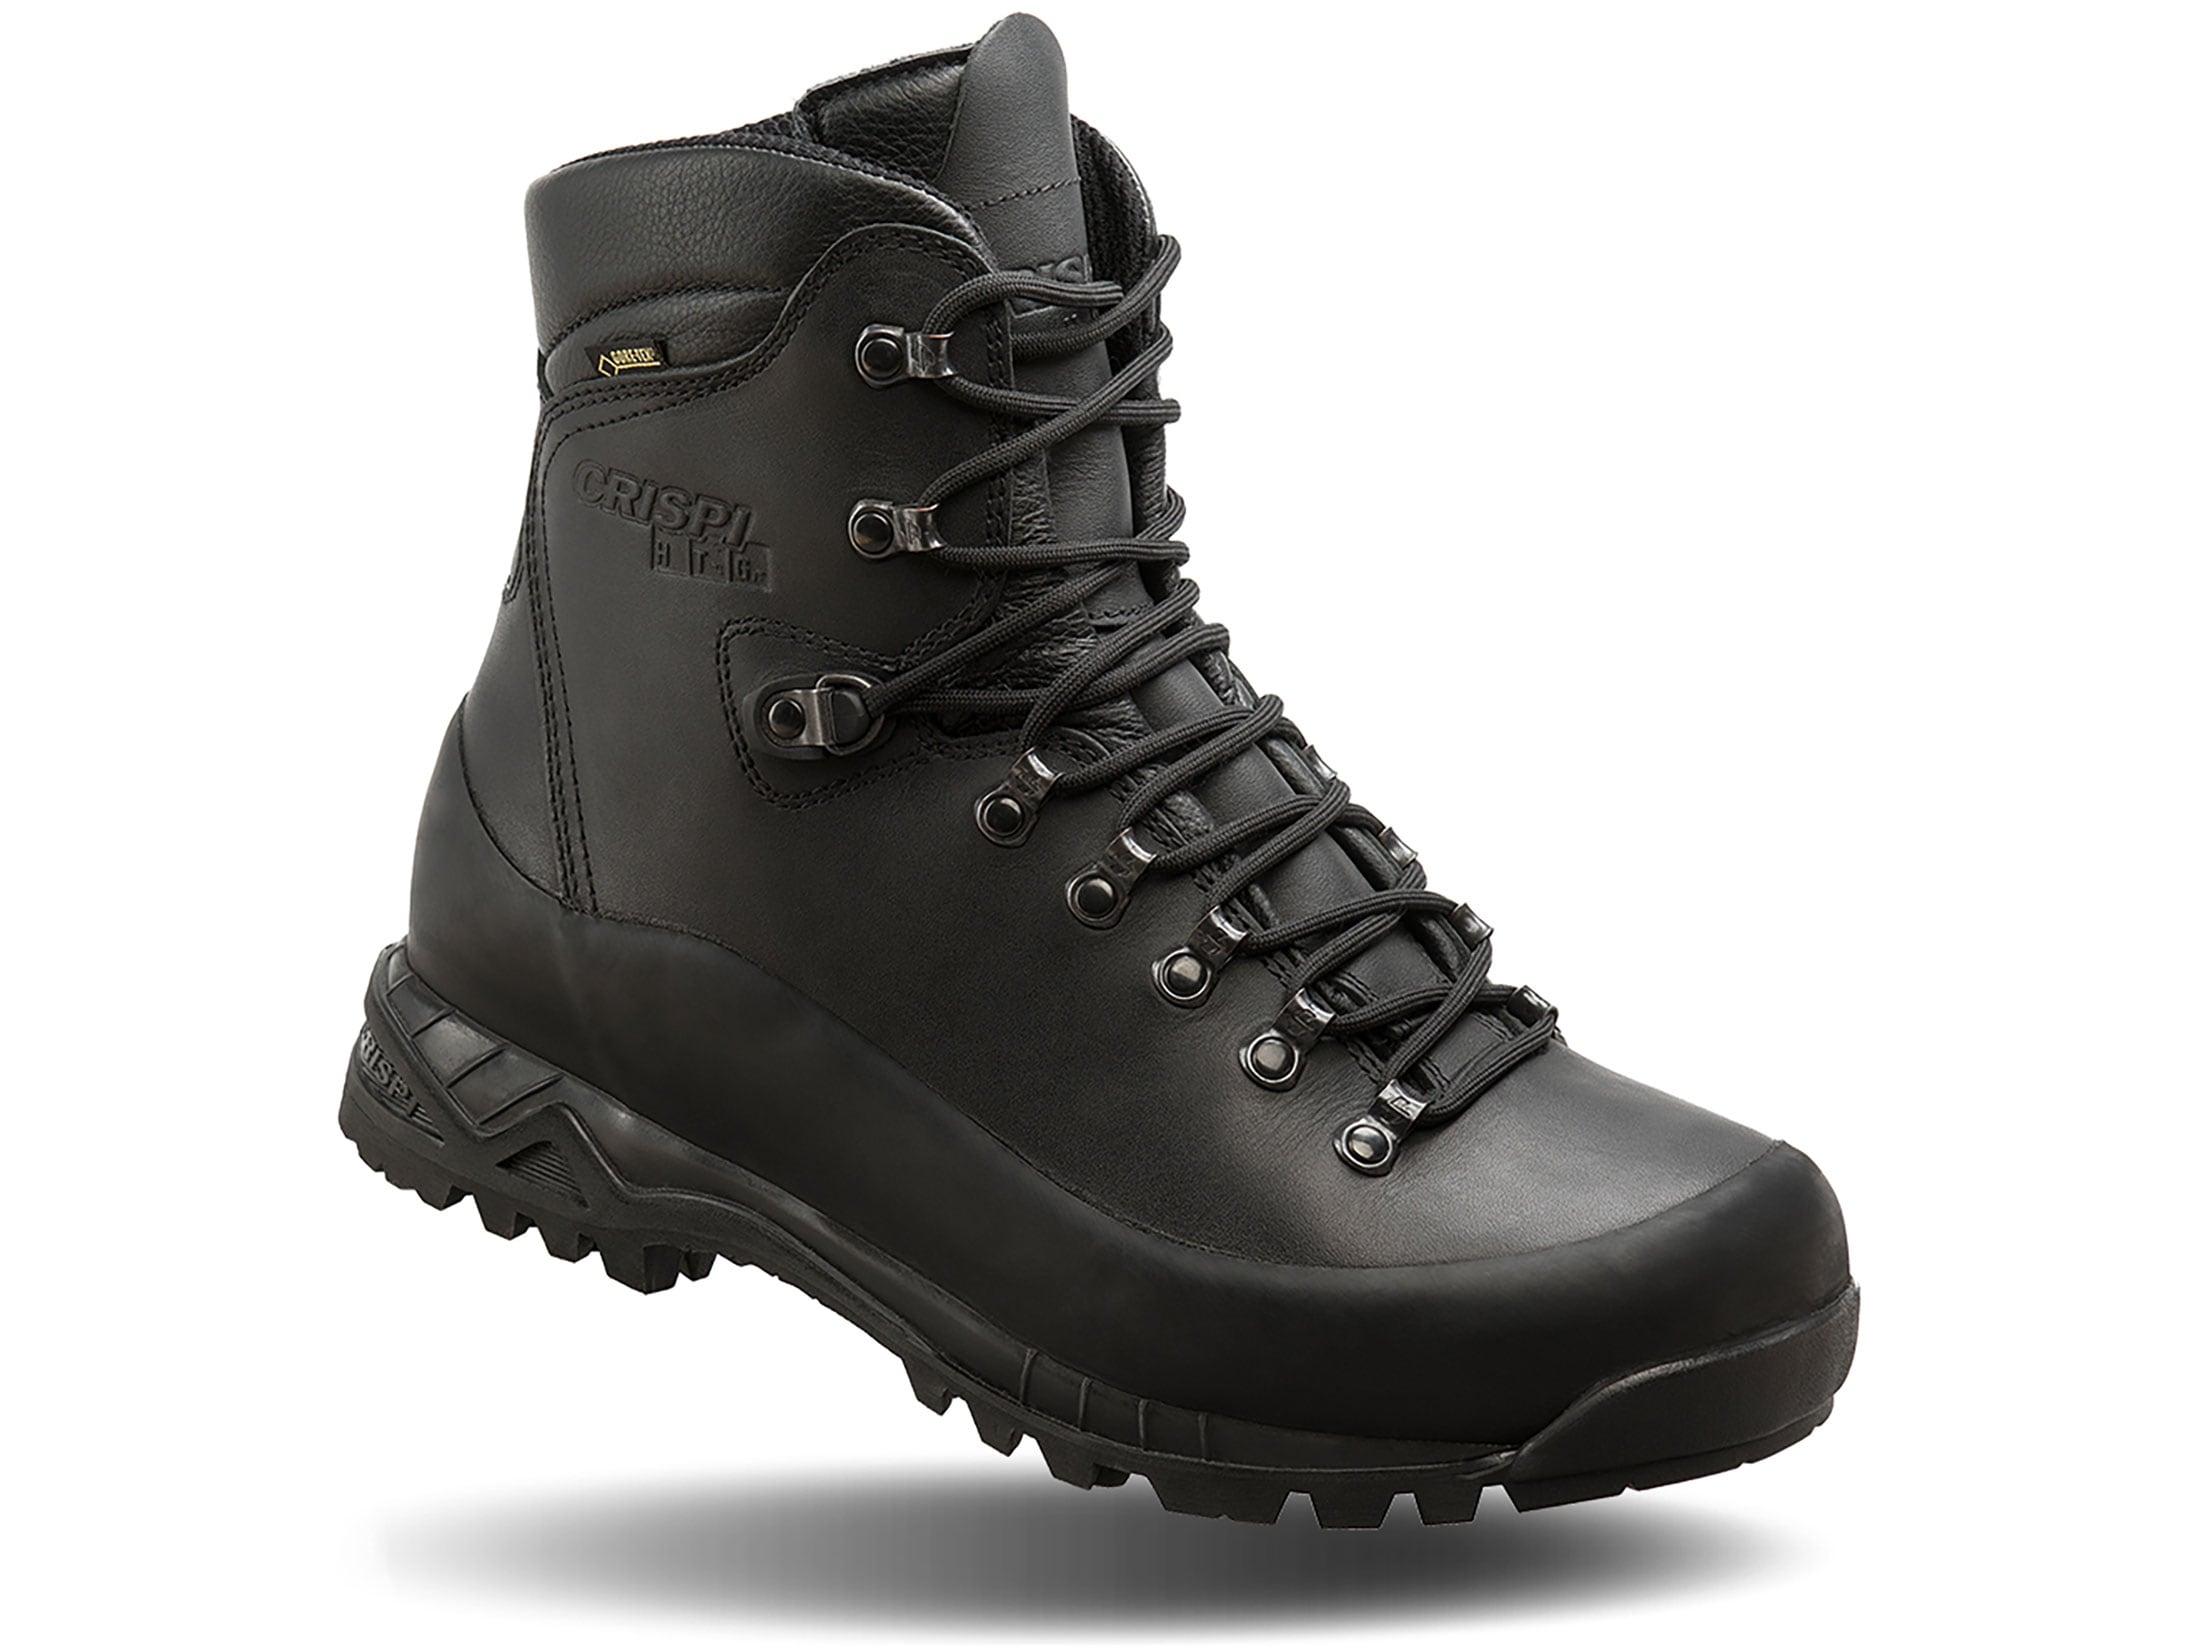 Crispi Nevada Black GTX 8 Waterproof GORE-TEX Tactical Boots Leather